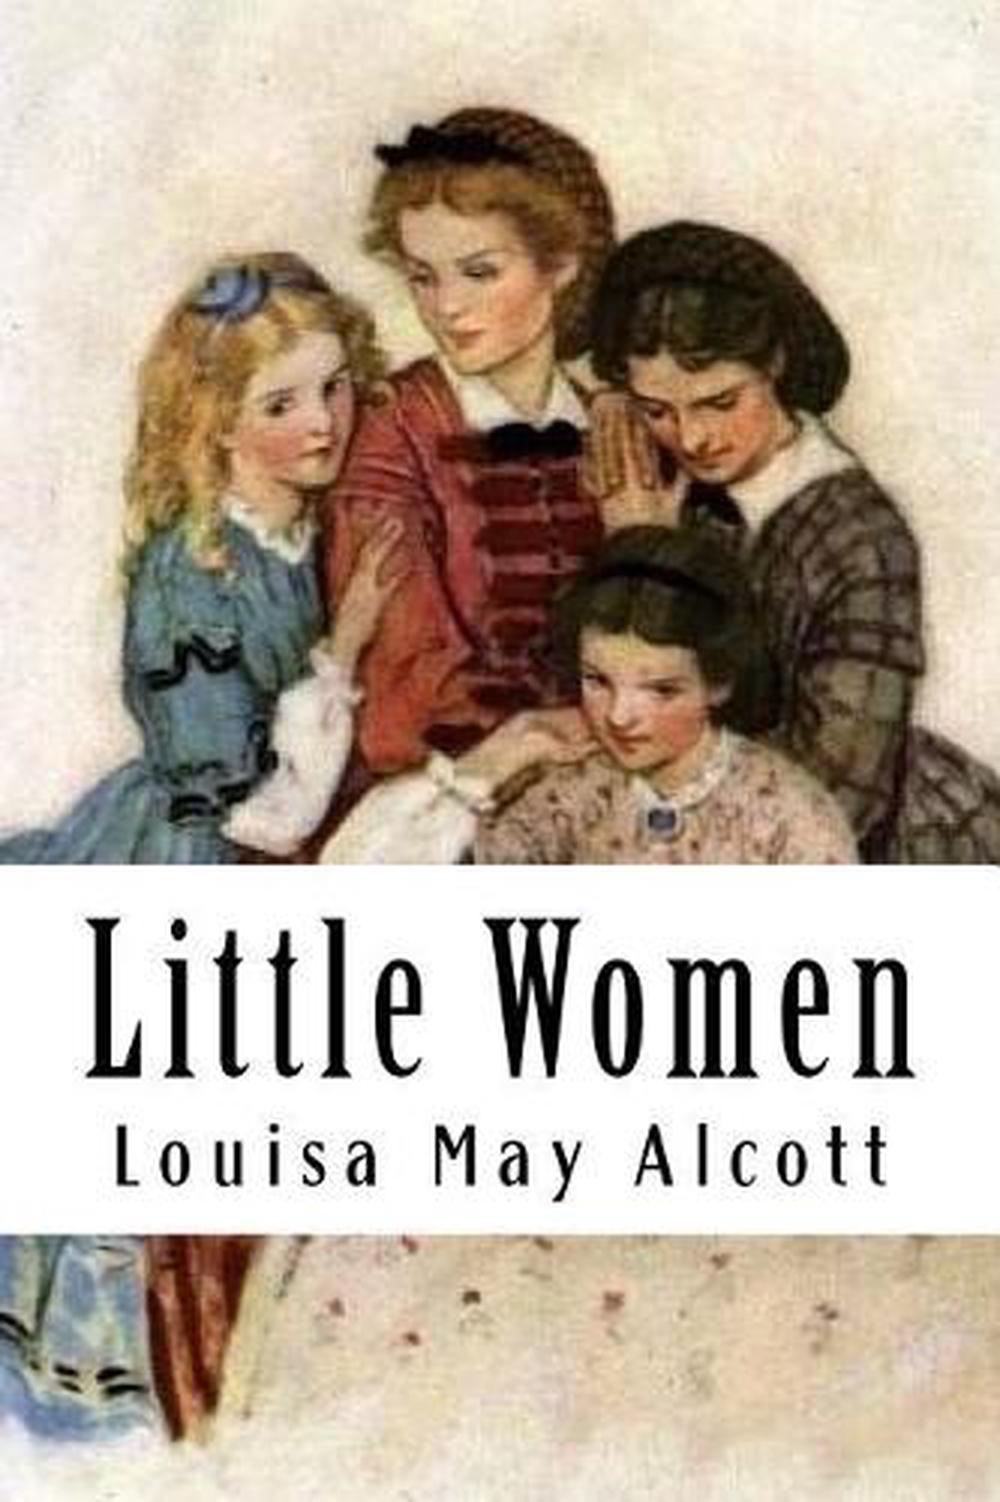 book review of little women wikipedia